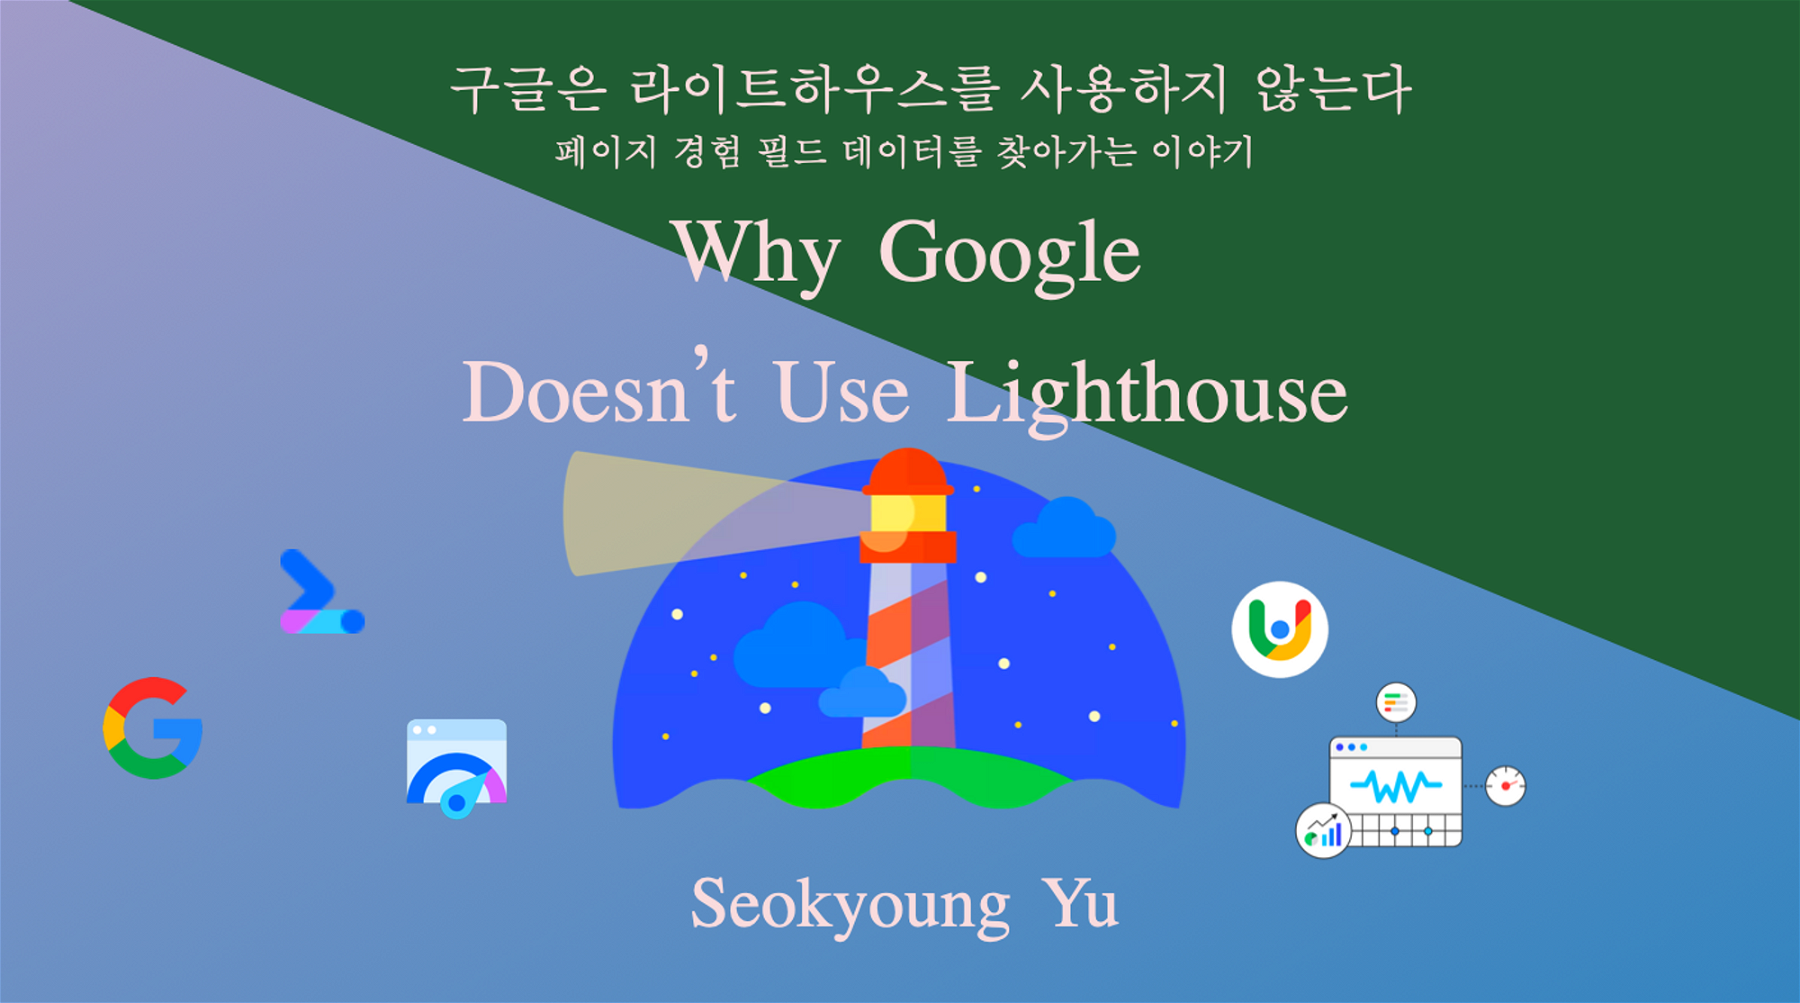 Google은 Lighthouse를 사용하지 않는다